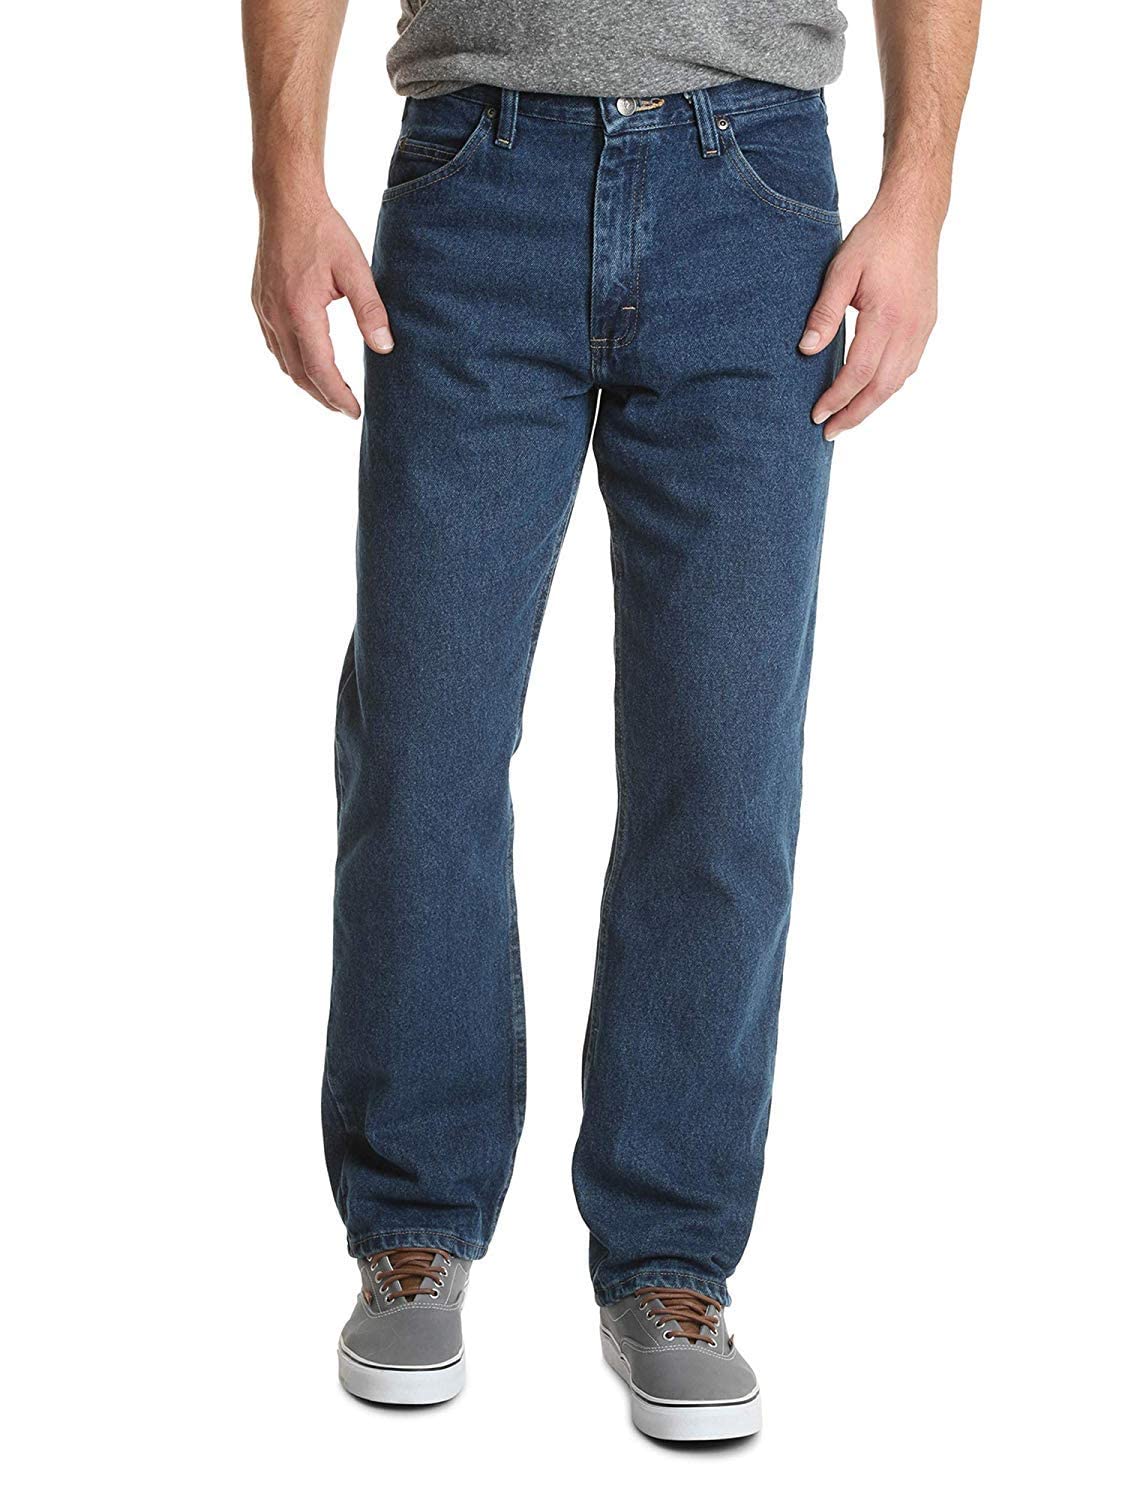 Wrangler Authentics Men's Classic 5-Pocket Relaxed Fit Cotton Jean, Dark Stonewash, 42W x 34L